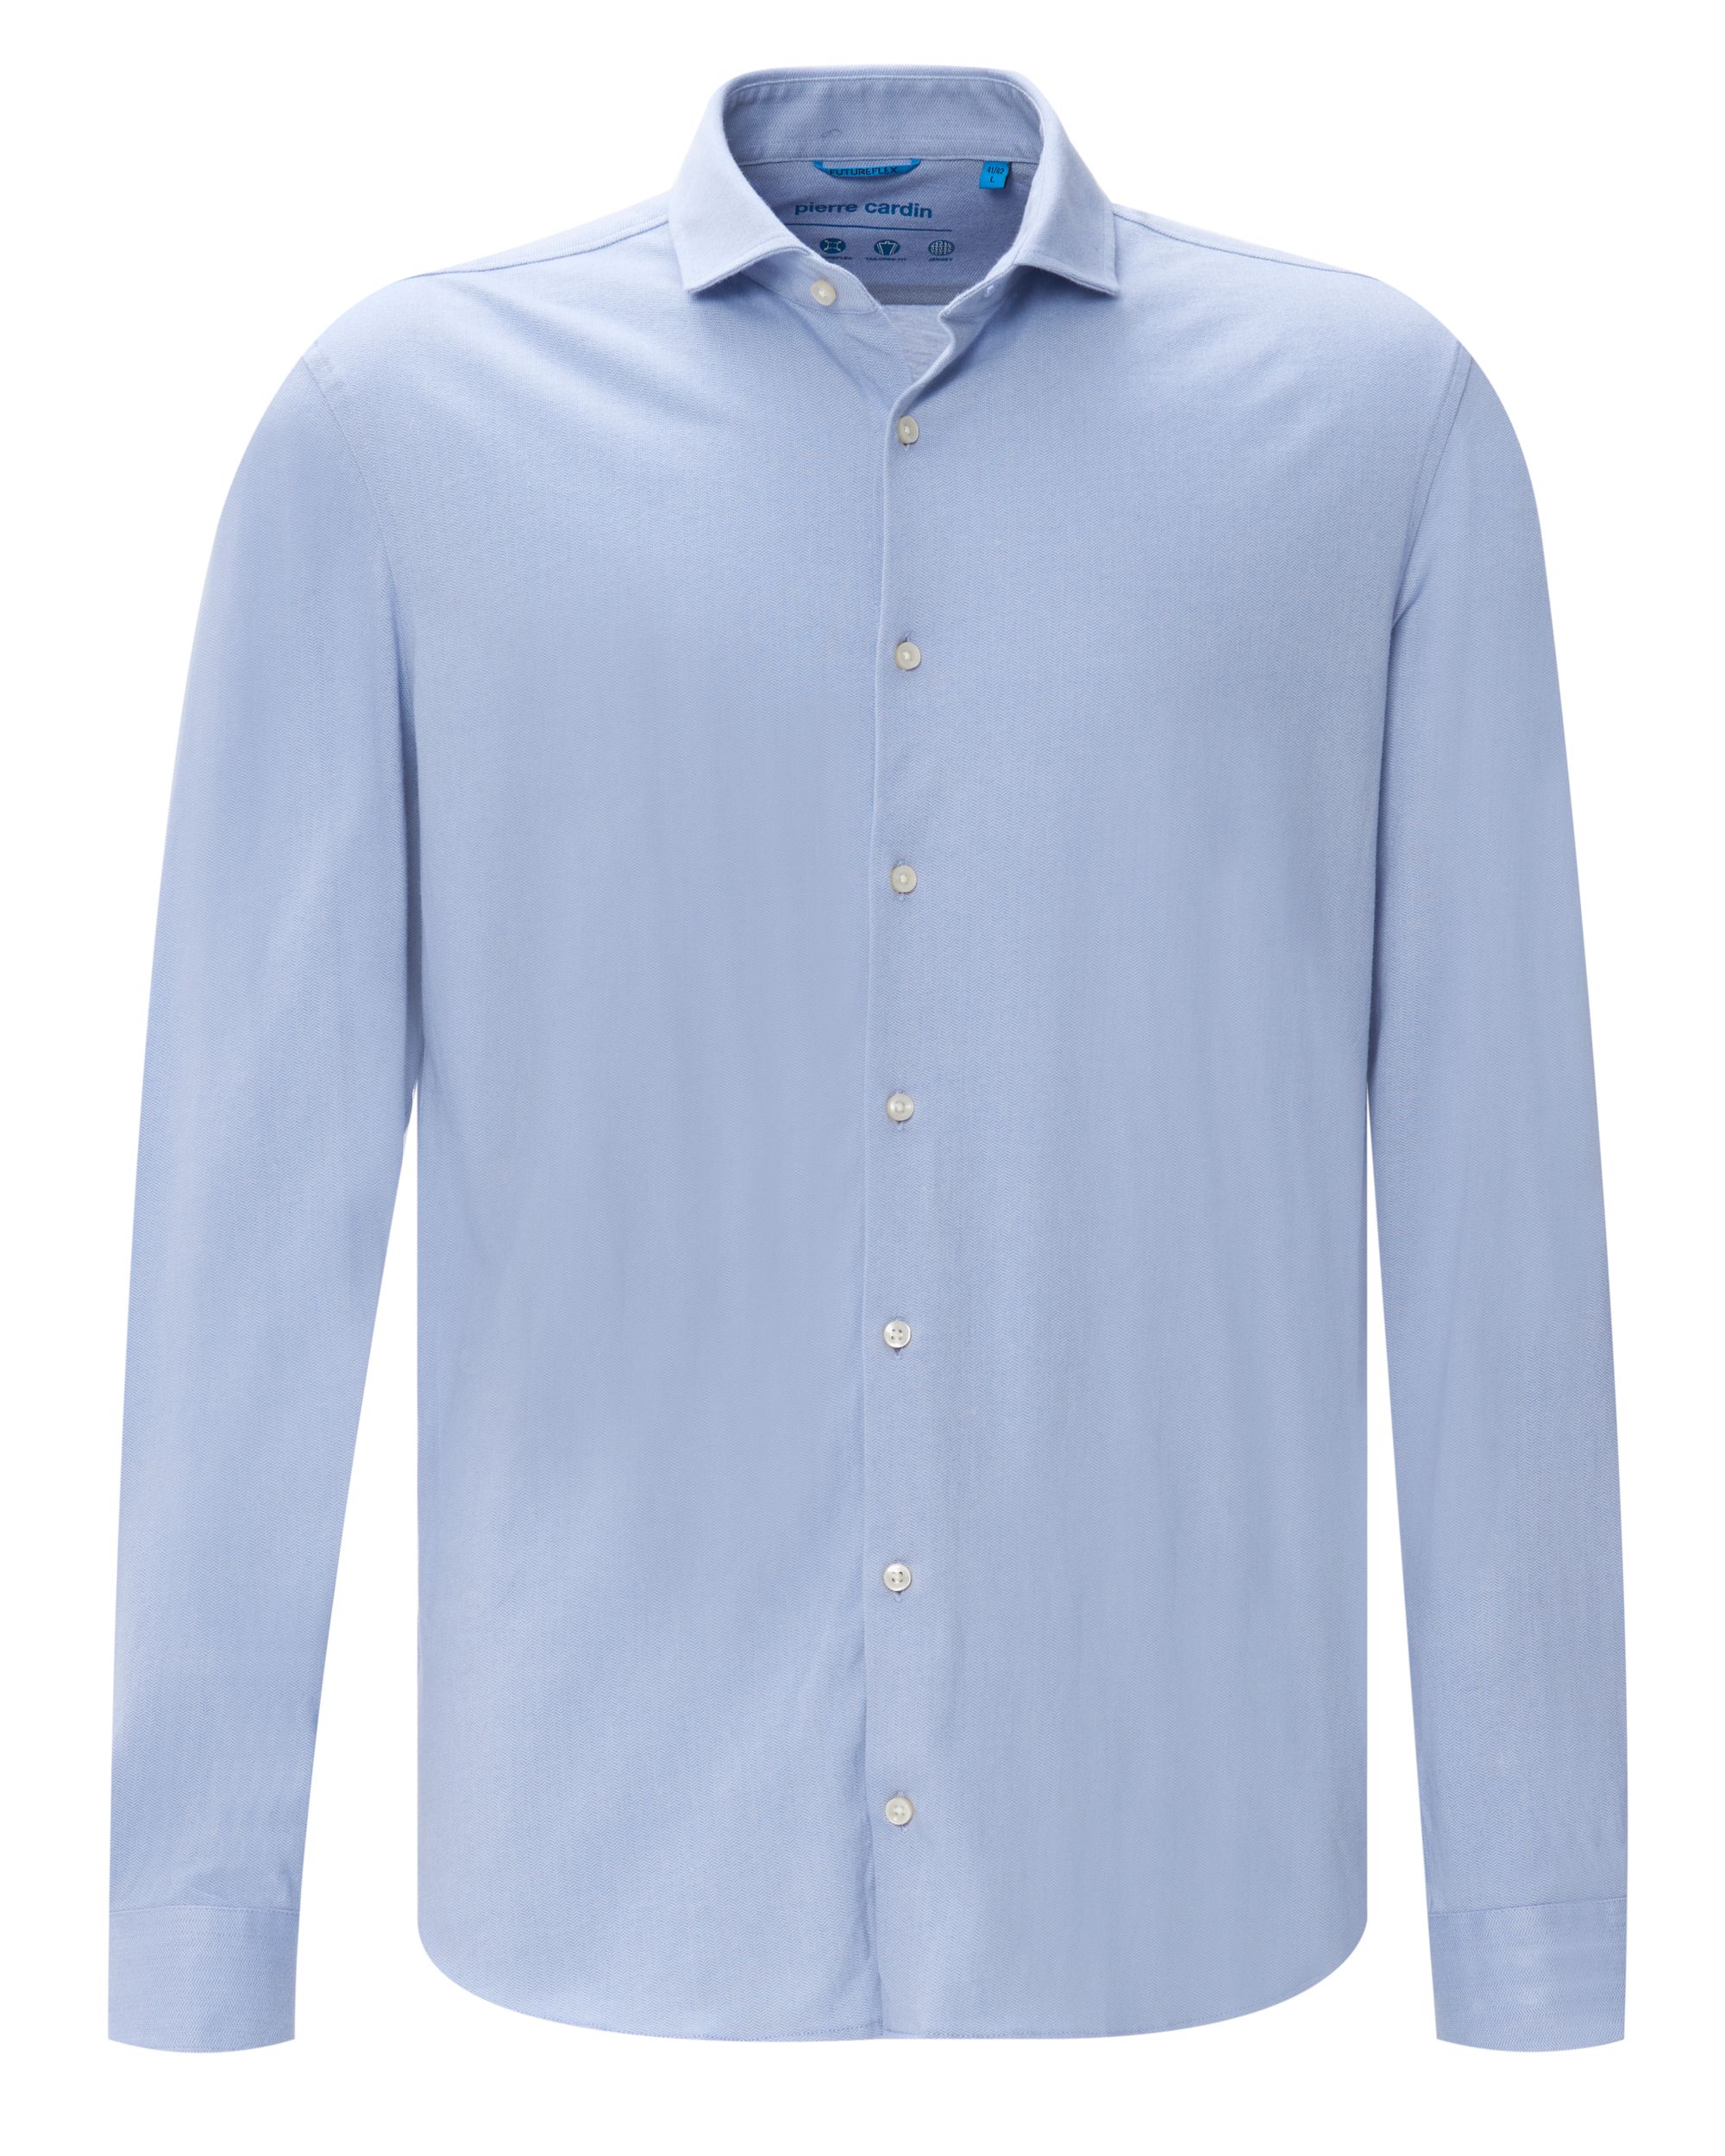 Pierre Cardin Overhemd LM Blauw 078847-001-L